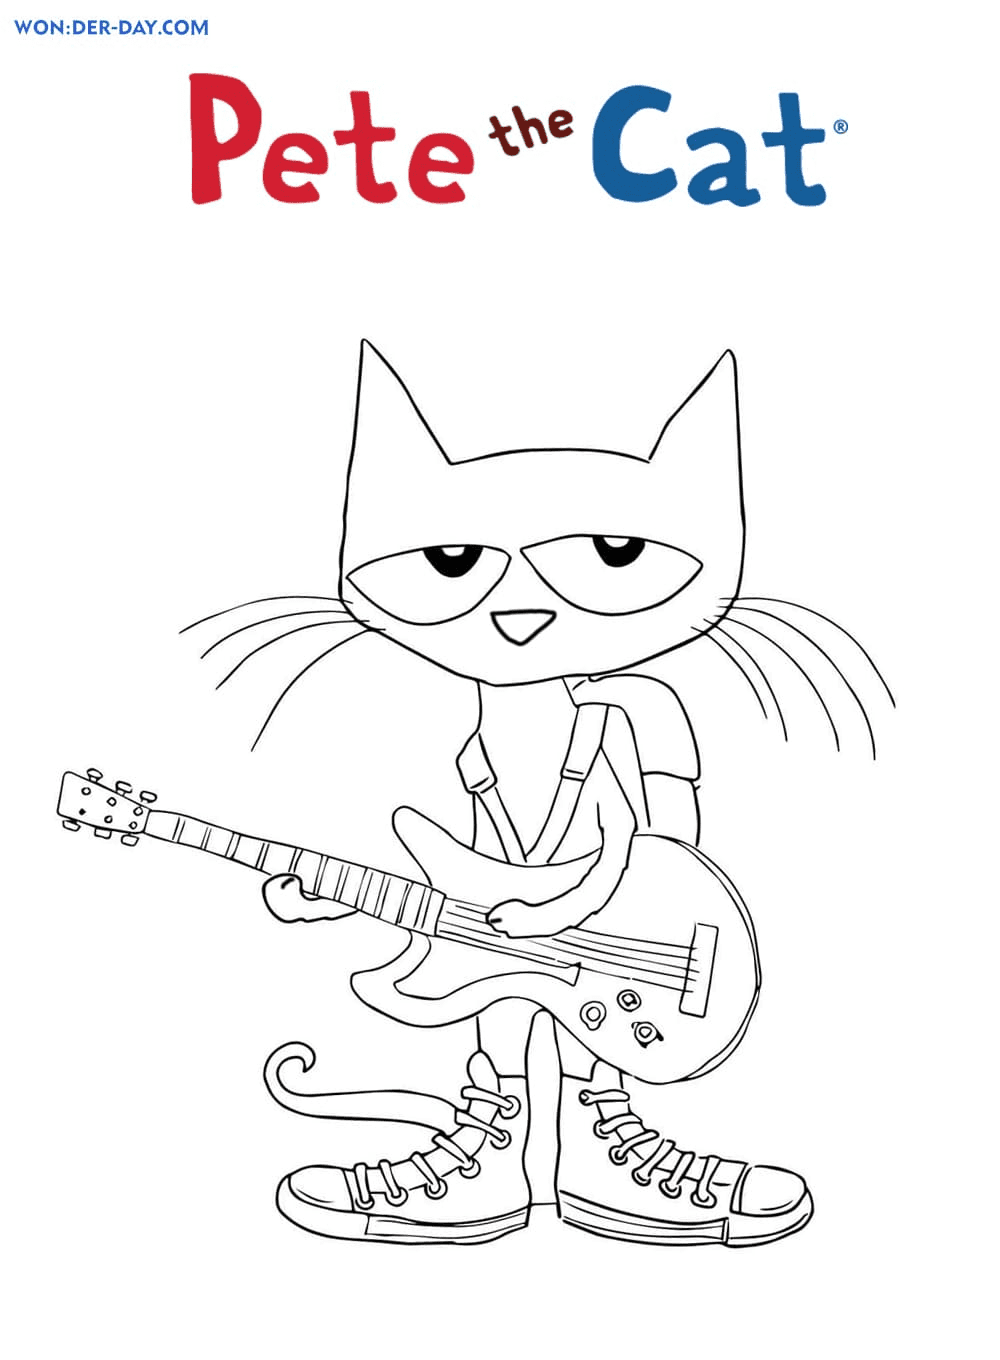 Desenho de Pete the Cat toca guitarra para colorir